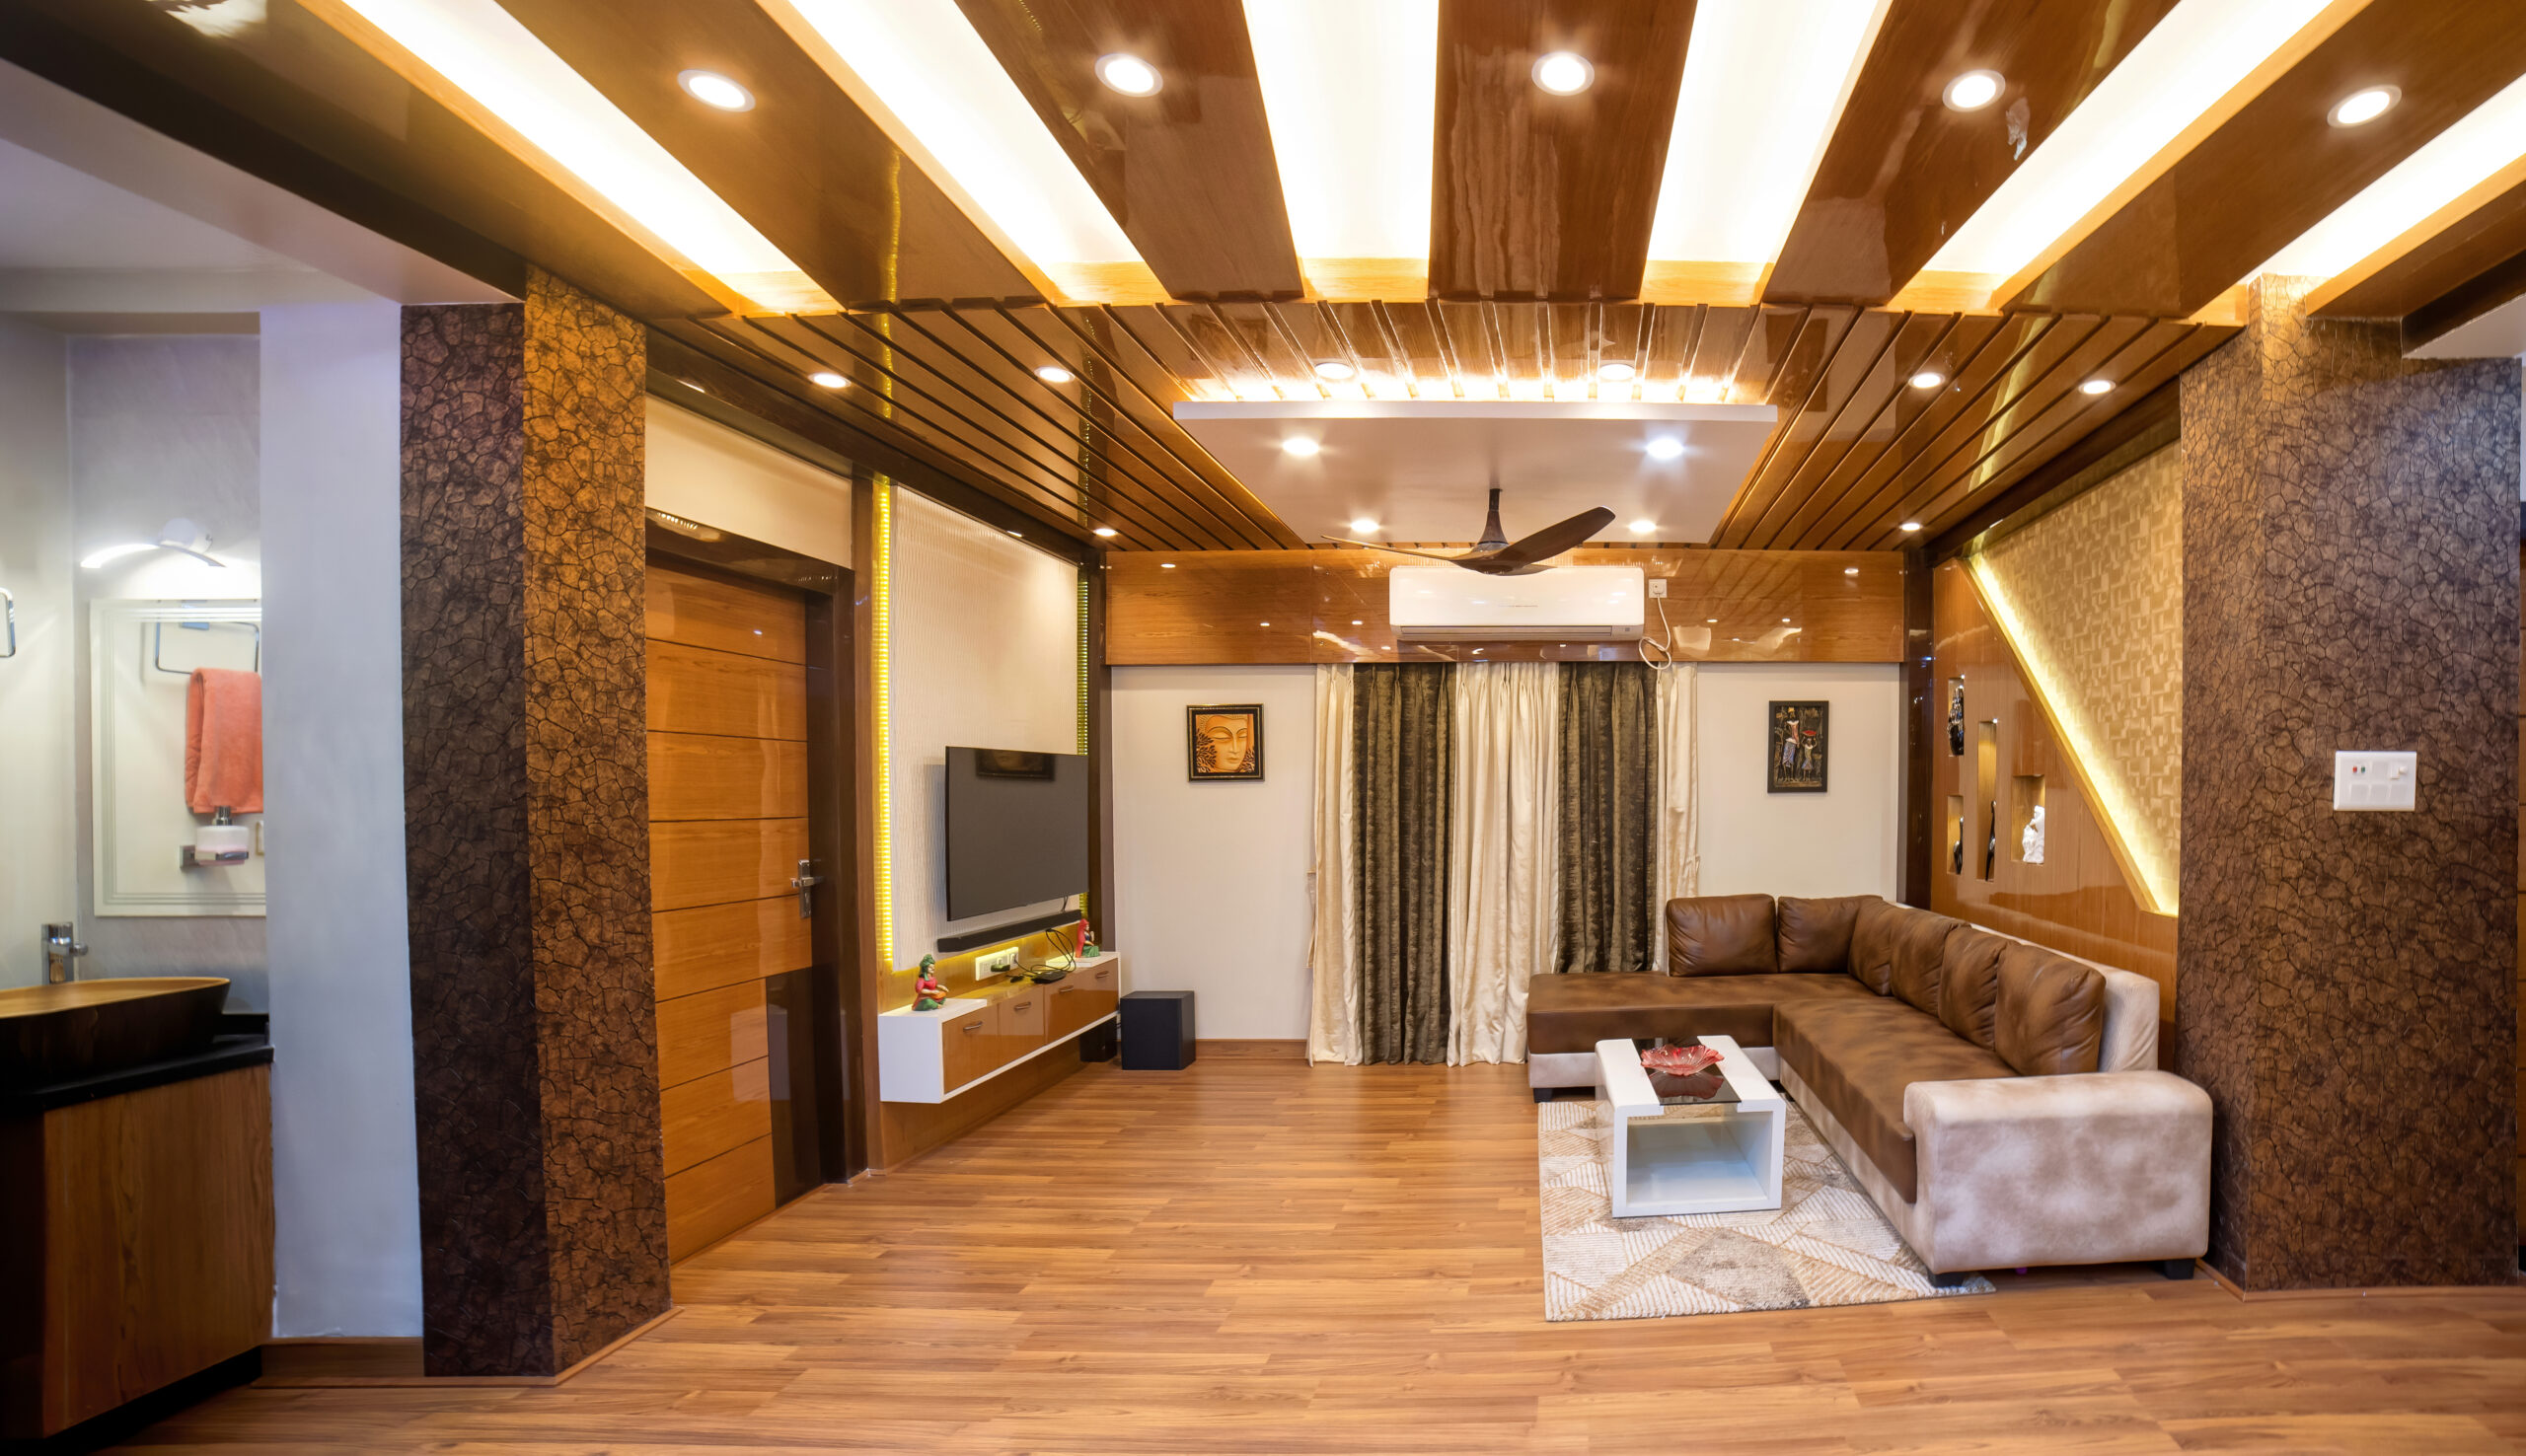 Best Interior Design Home & Commercial Blogs in Kolkata, WB, India